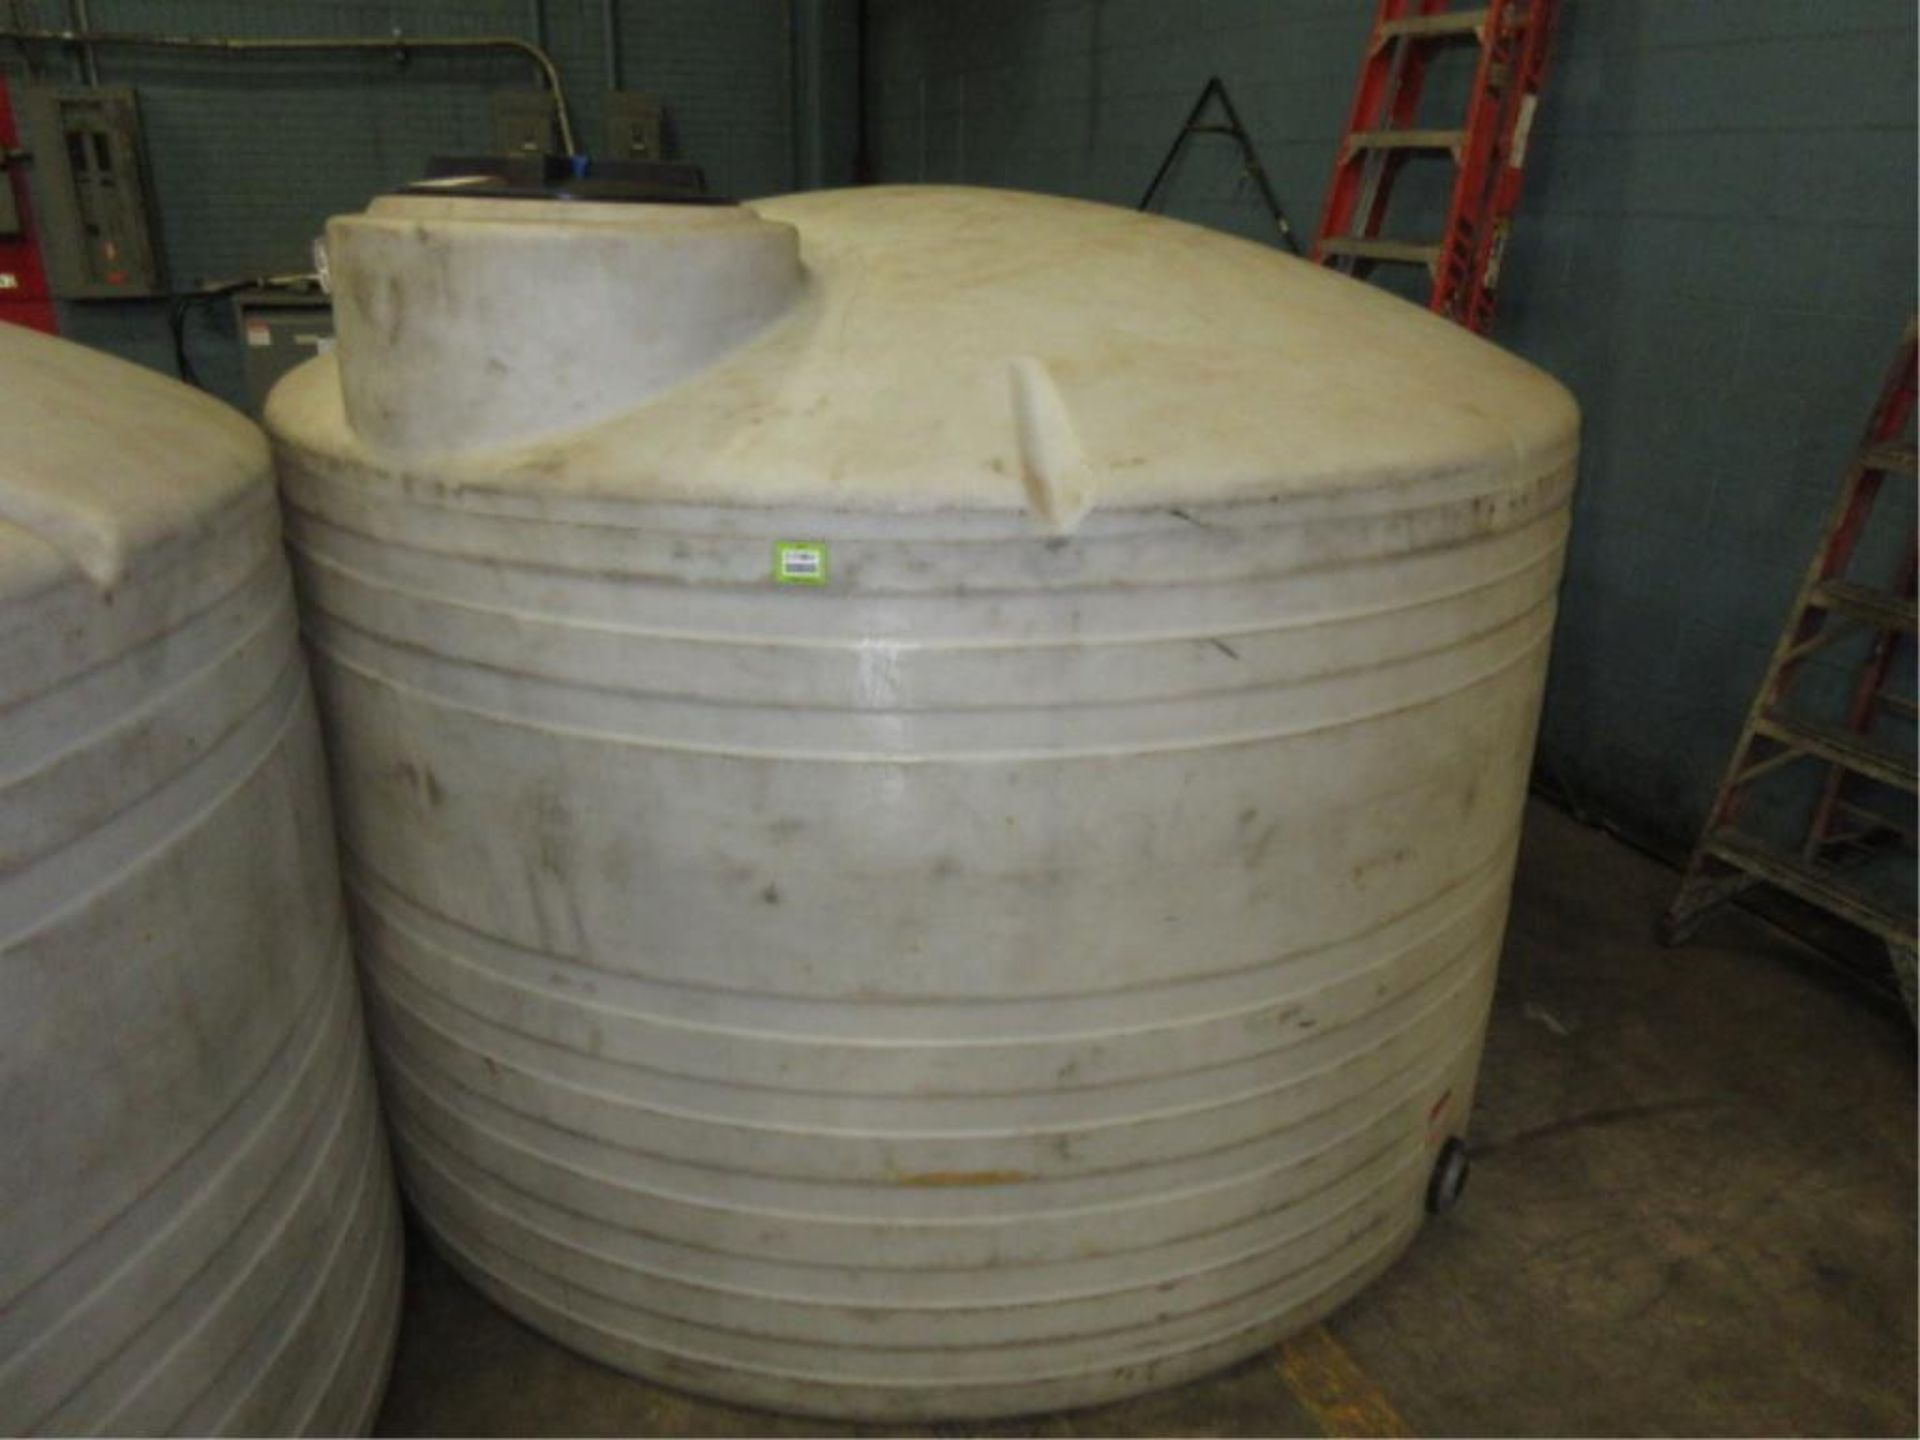 Poly Storage Tank. Poly Storage Tank, 1500 gallon capacity, 8' dia. HIT# 2179857. Loc: warehouse.